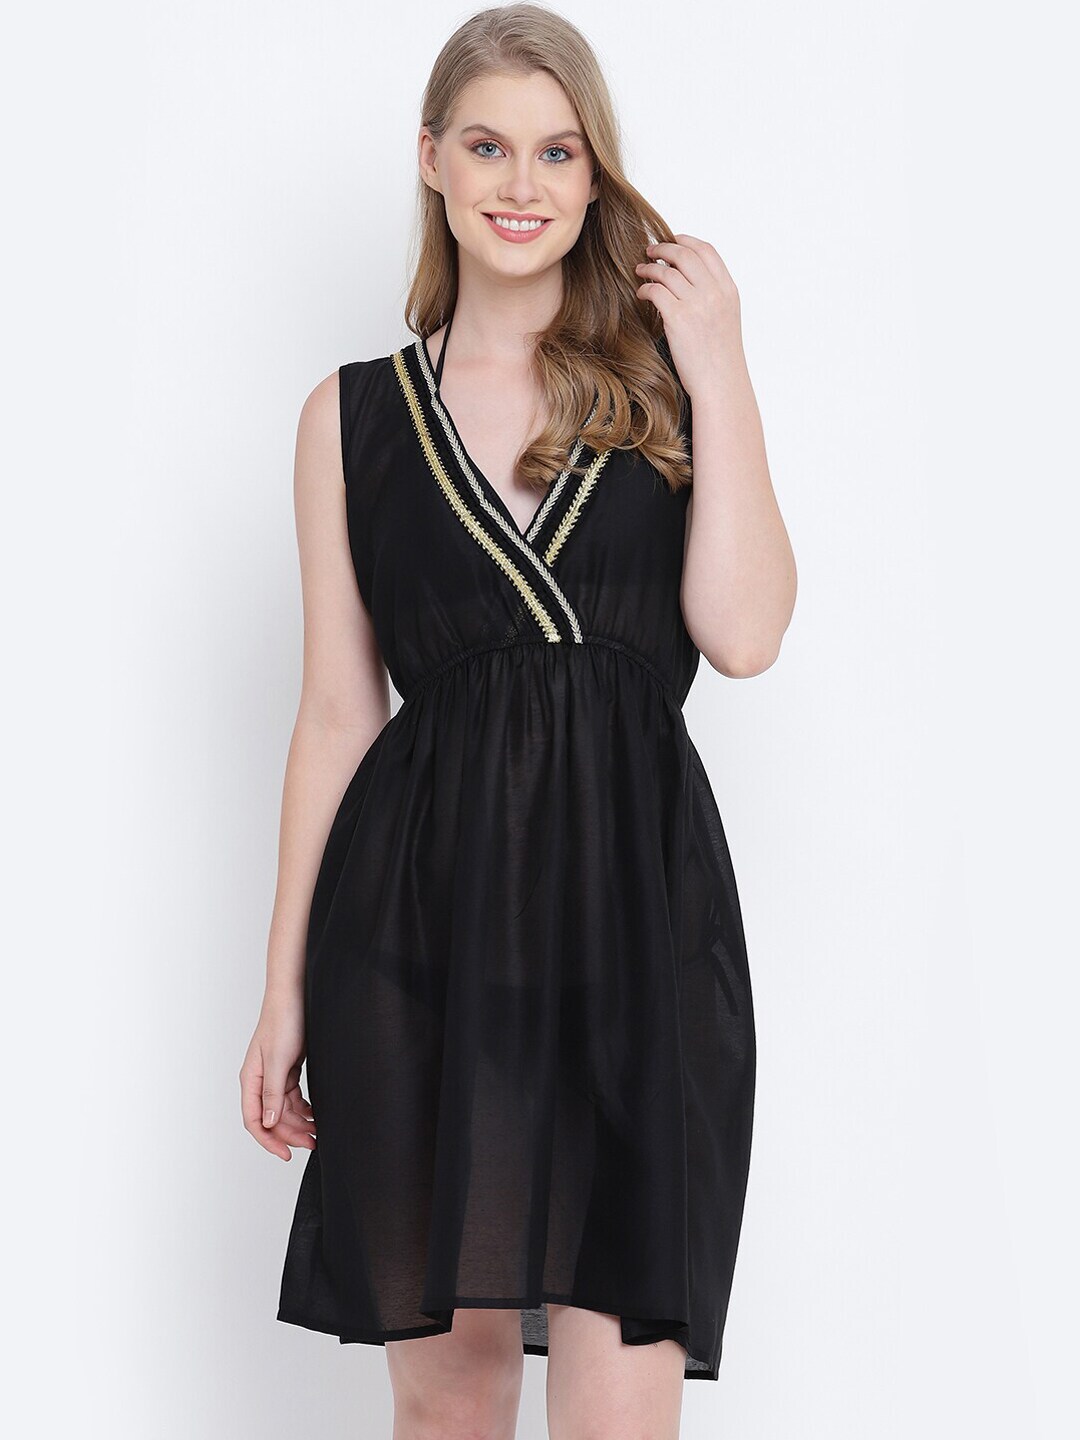 Oxolloxo Women Black & Beige Lace design beachwear Dress Price in India